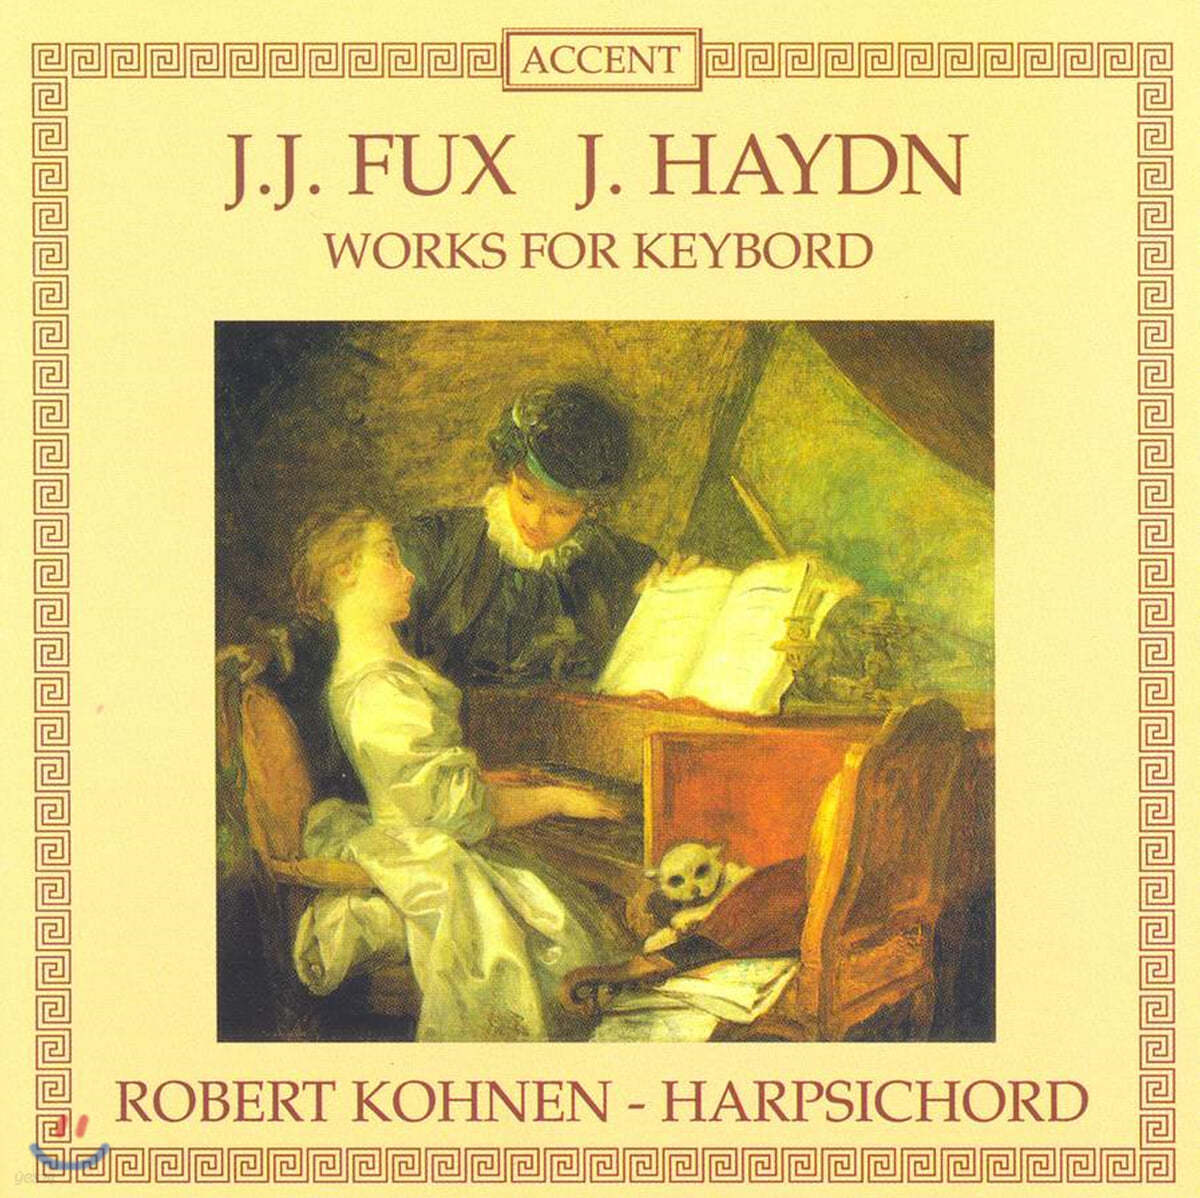 Robert Kohnen 푹스 / 하이든 : 키보드 작품집 (Johann Joseph Fux / Haydn : Keyboard works)